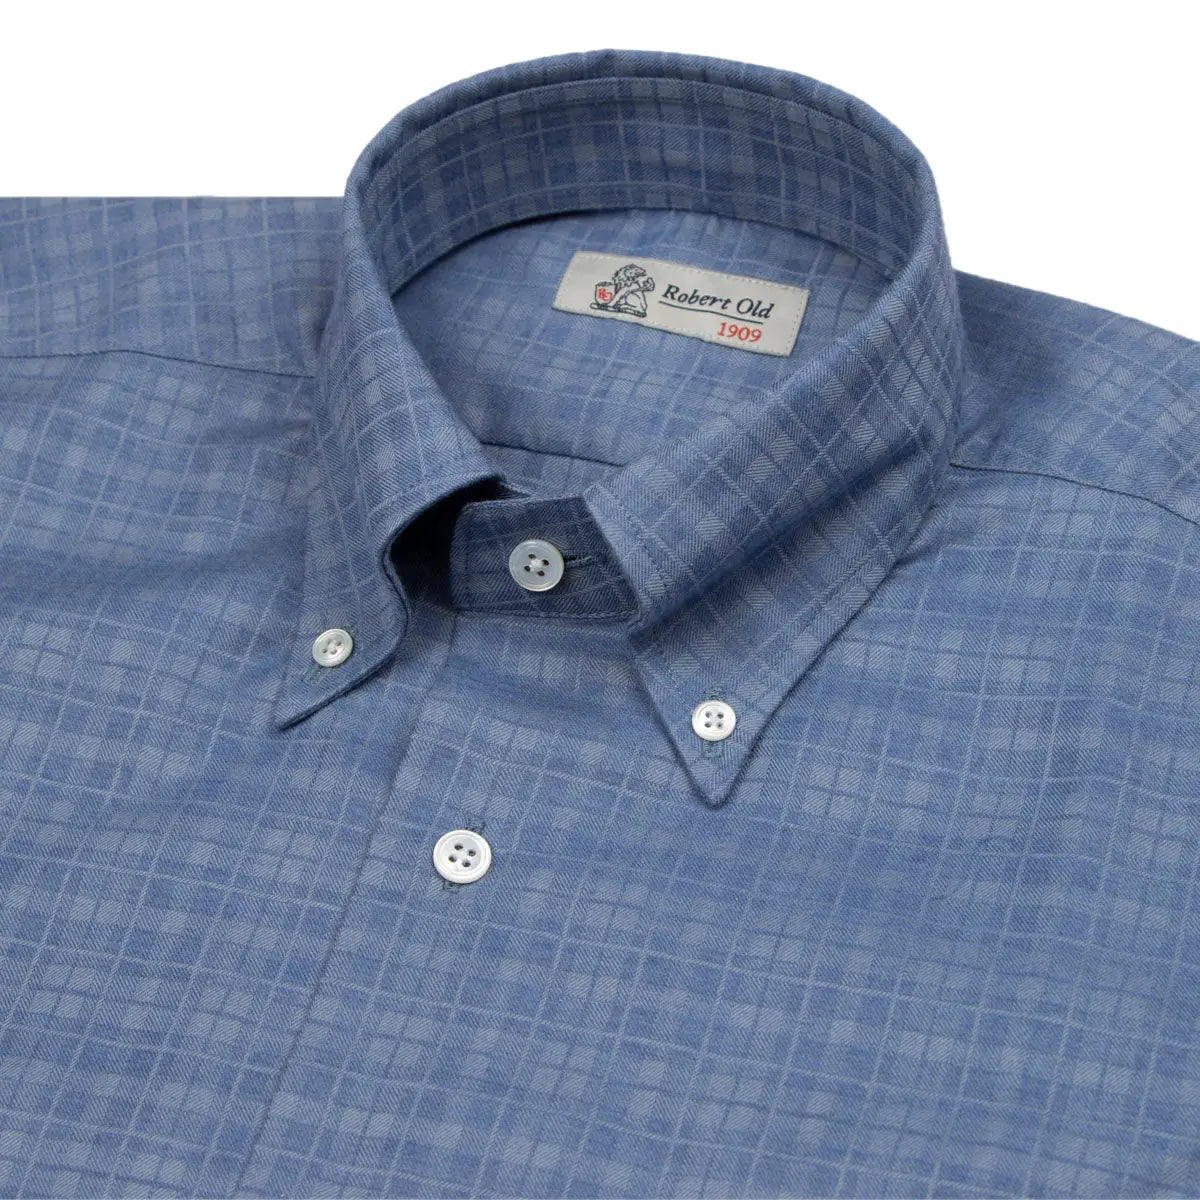 Blue Twill Check Flanello Junior Cotton Long Sleeve Shirt  Robert Old   